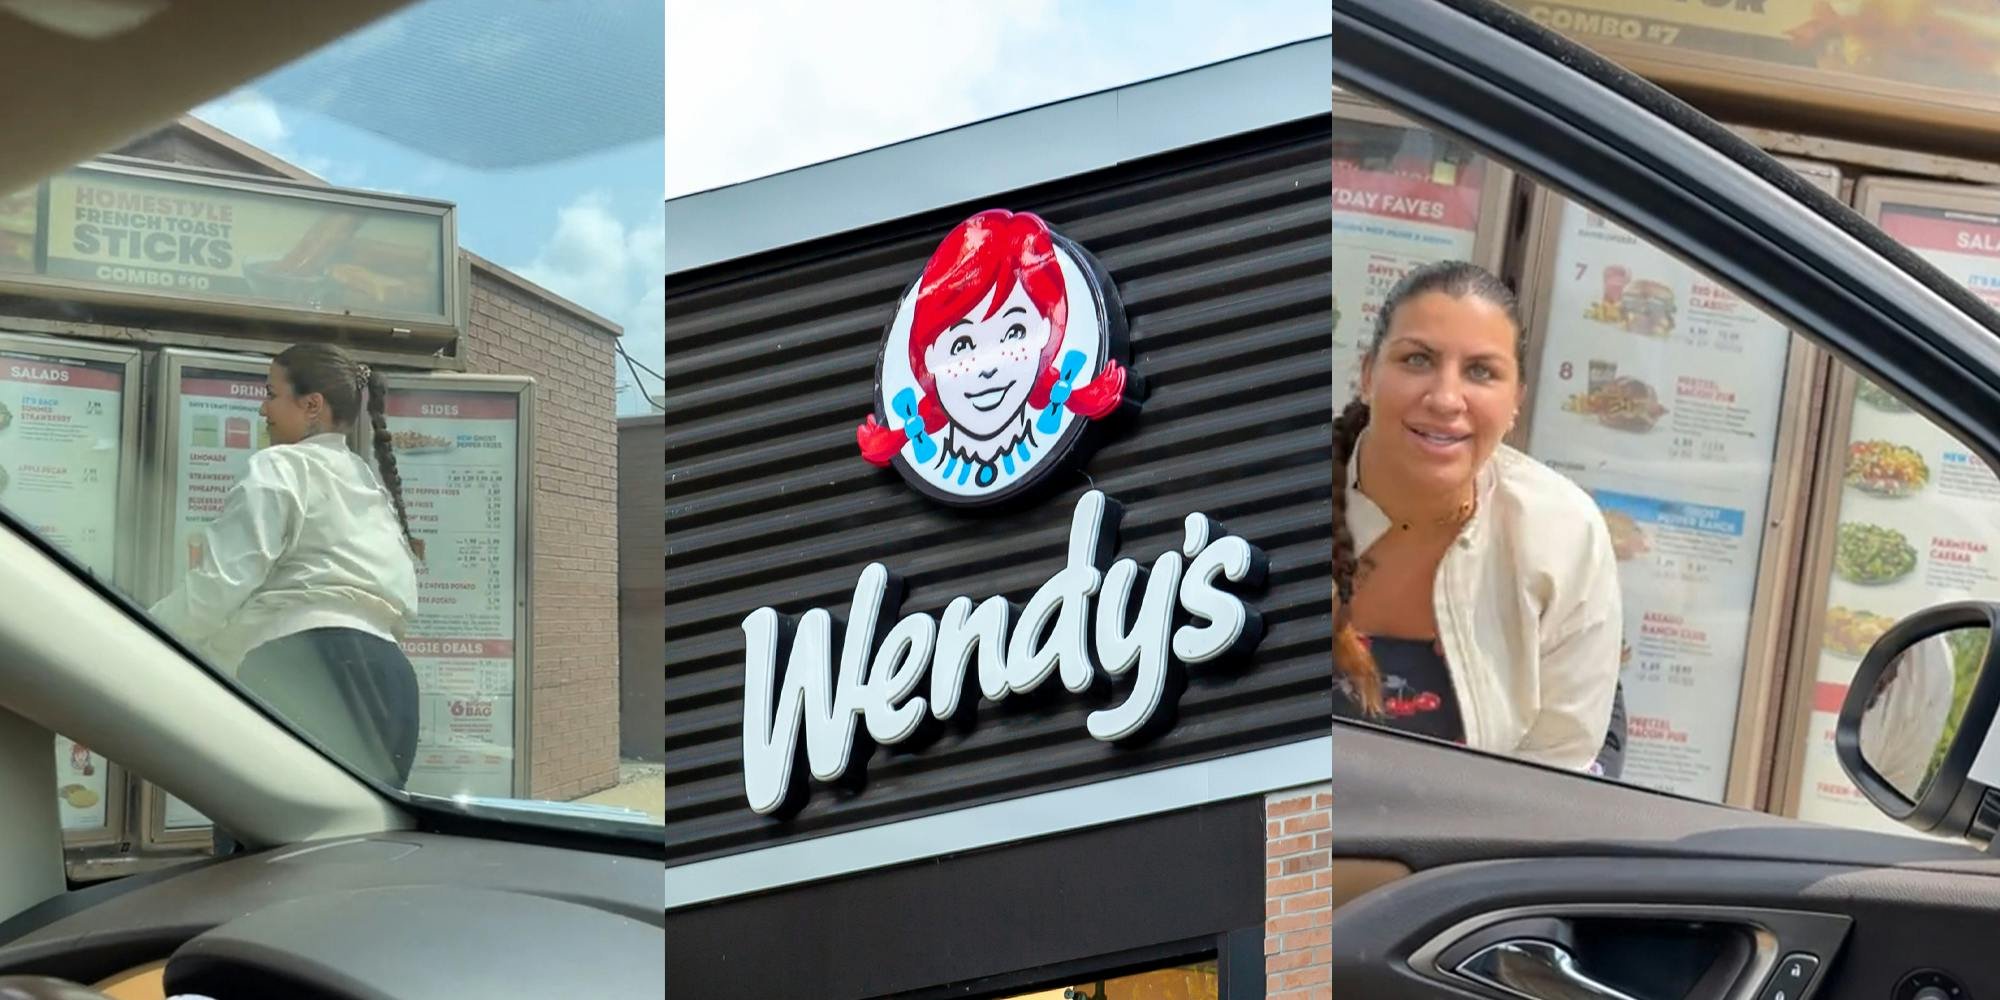 'That last minute breakfast rush is no joke': Wendy's customers get out of their car in drive-thru to flip menu. Viewers defend the worker